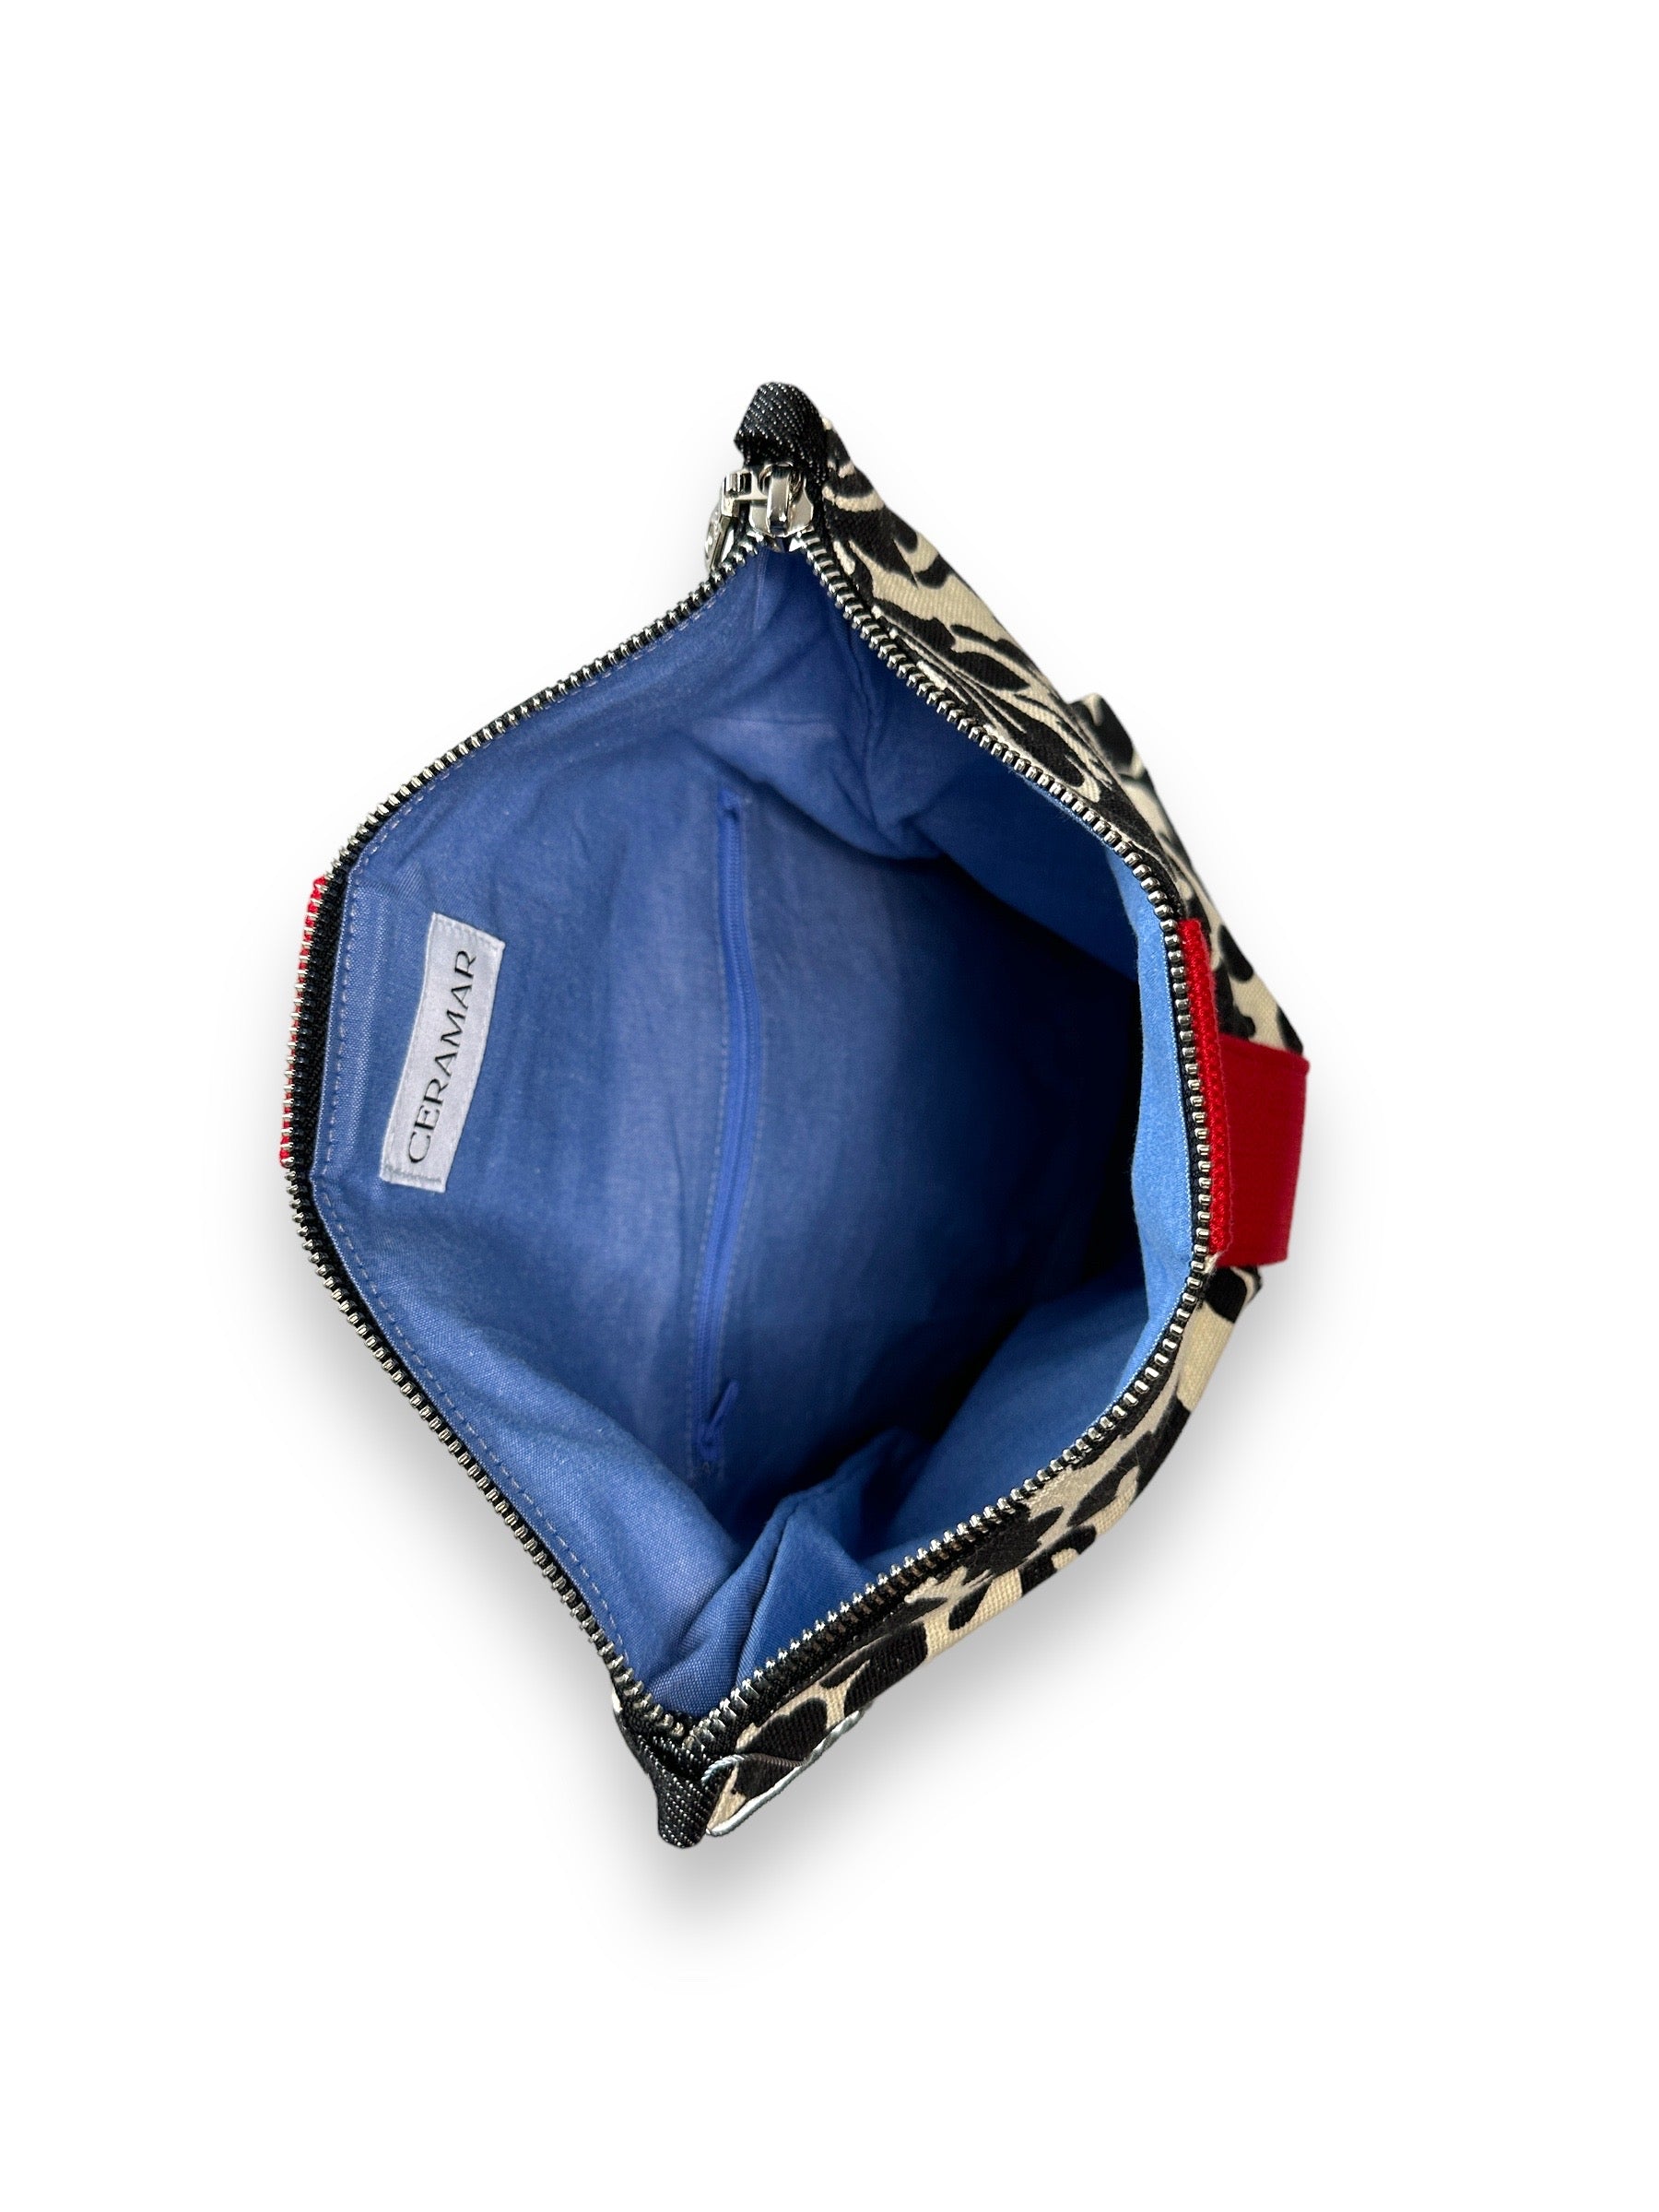 Foldover Crossbody Bag- Versatile Crossbody bag can be worn 3 ways. Fits your phone, wallet, keys and lipgloss!